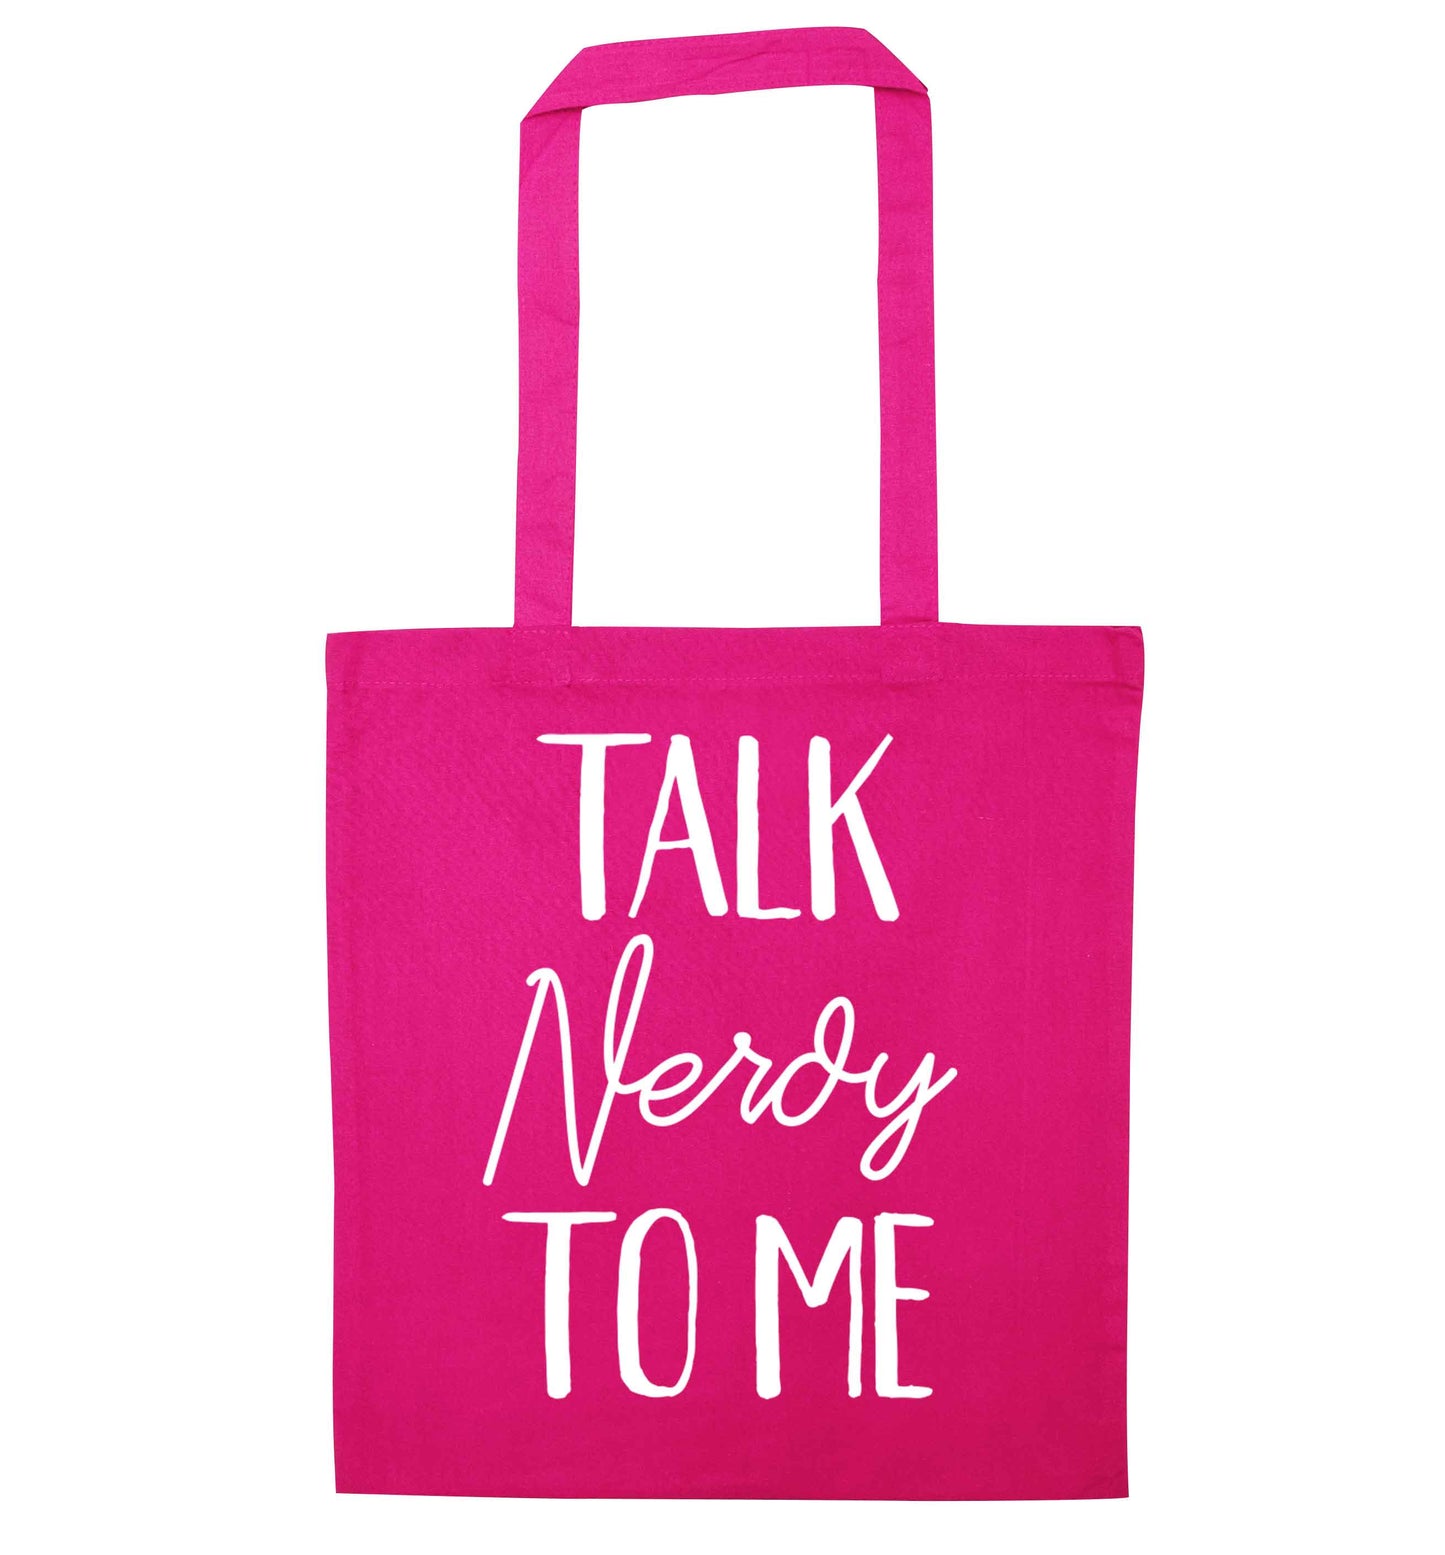 Talk nerdy to me pink tote bag